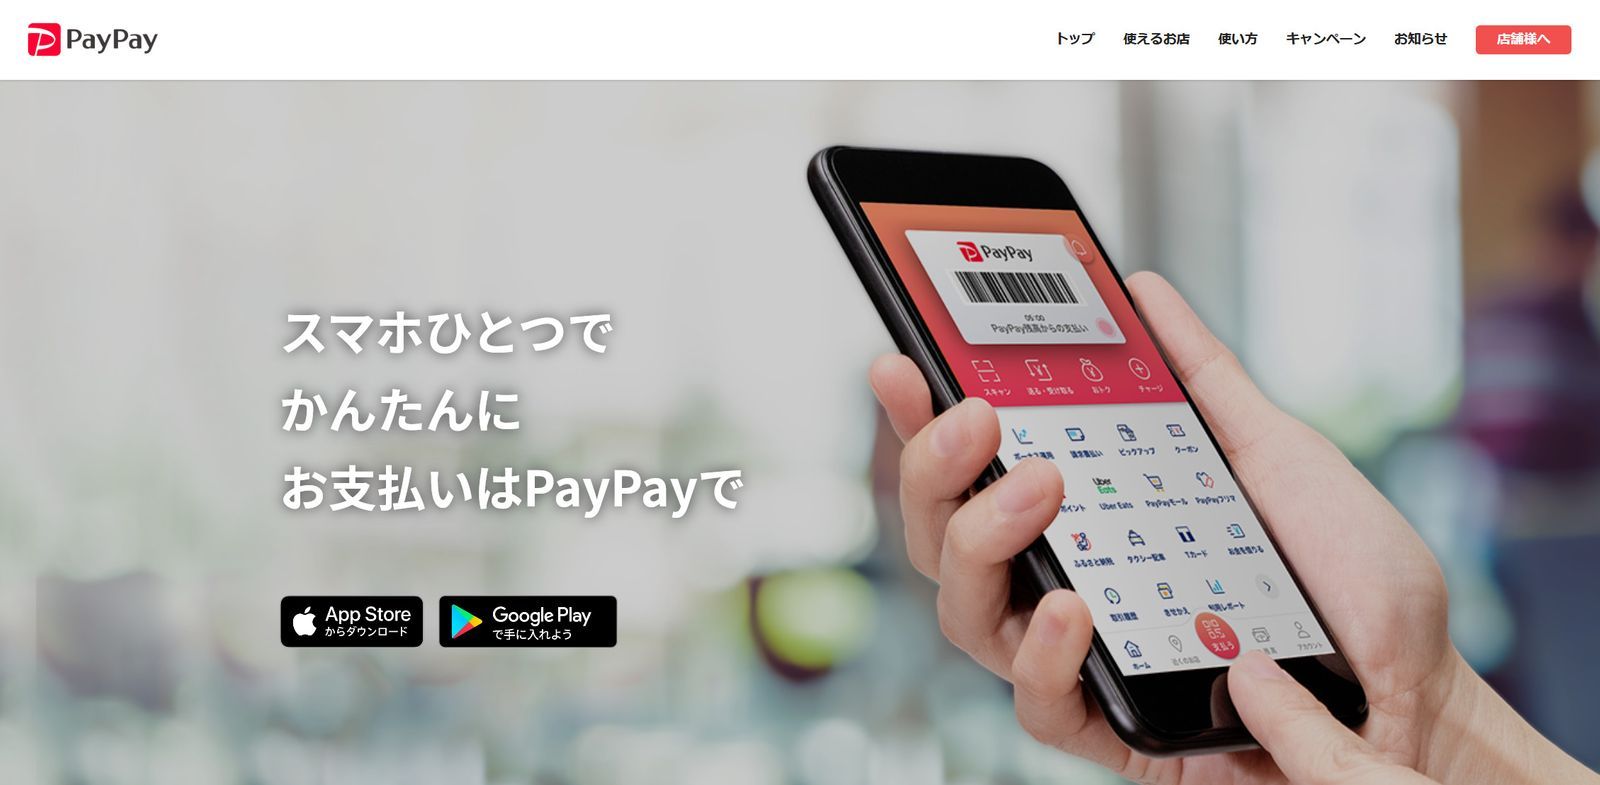 Screenshot of PayPay website